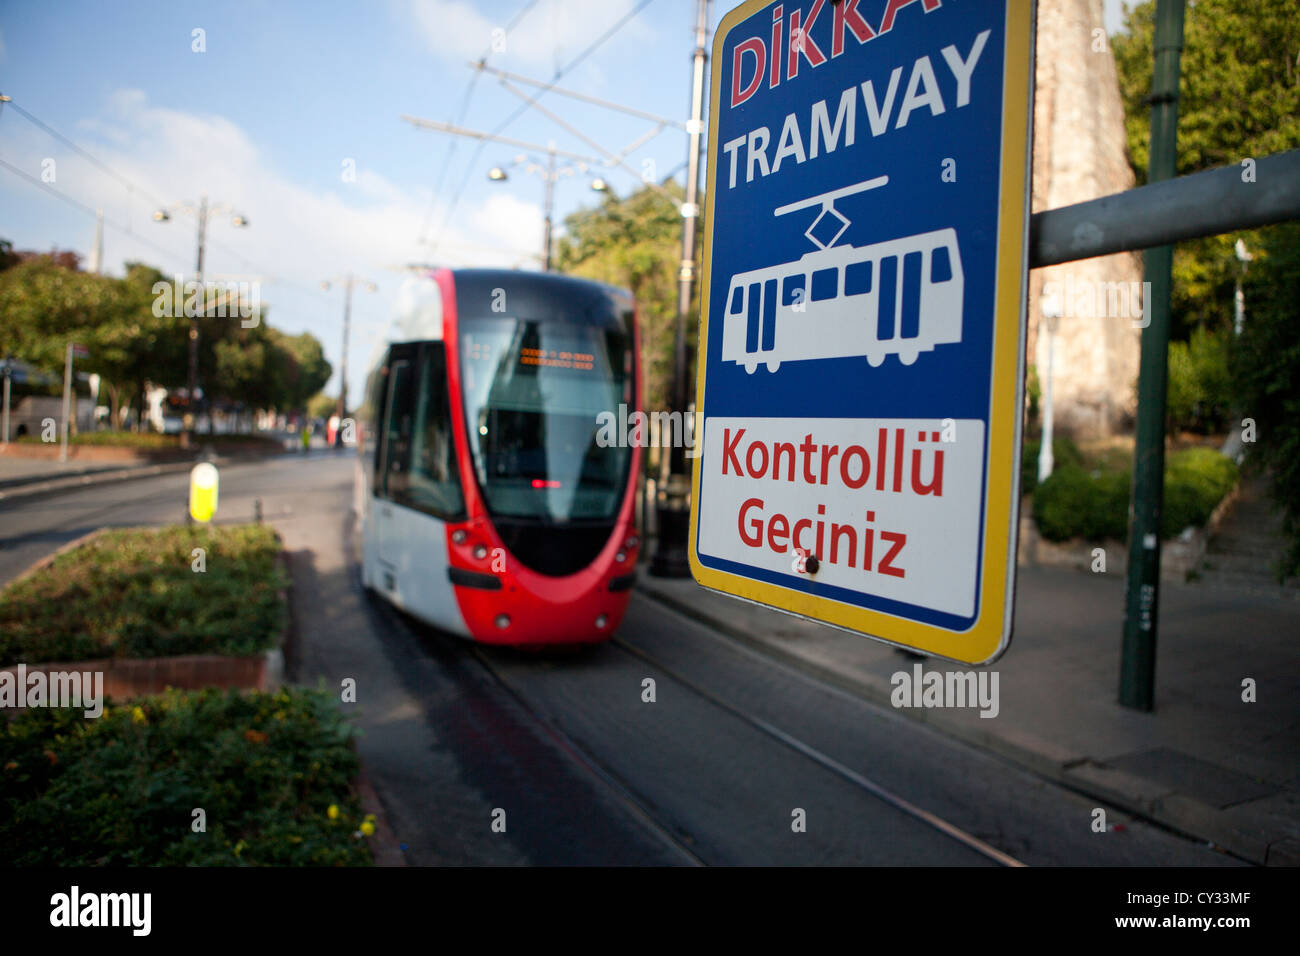 public transport (tram) in istanbul Stock Photo